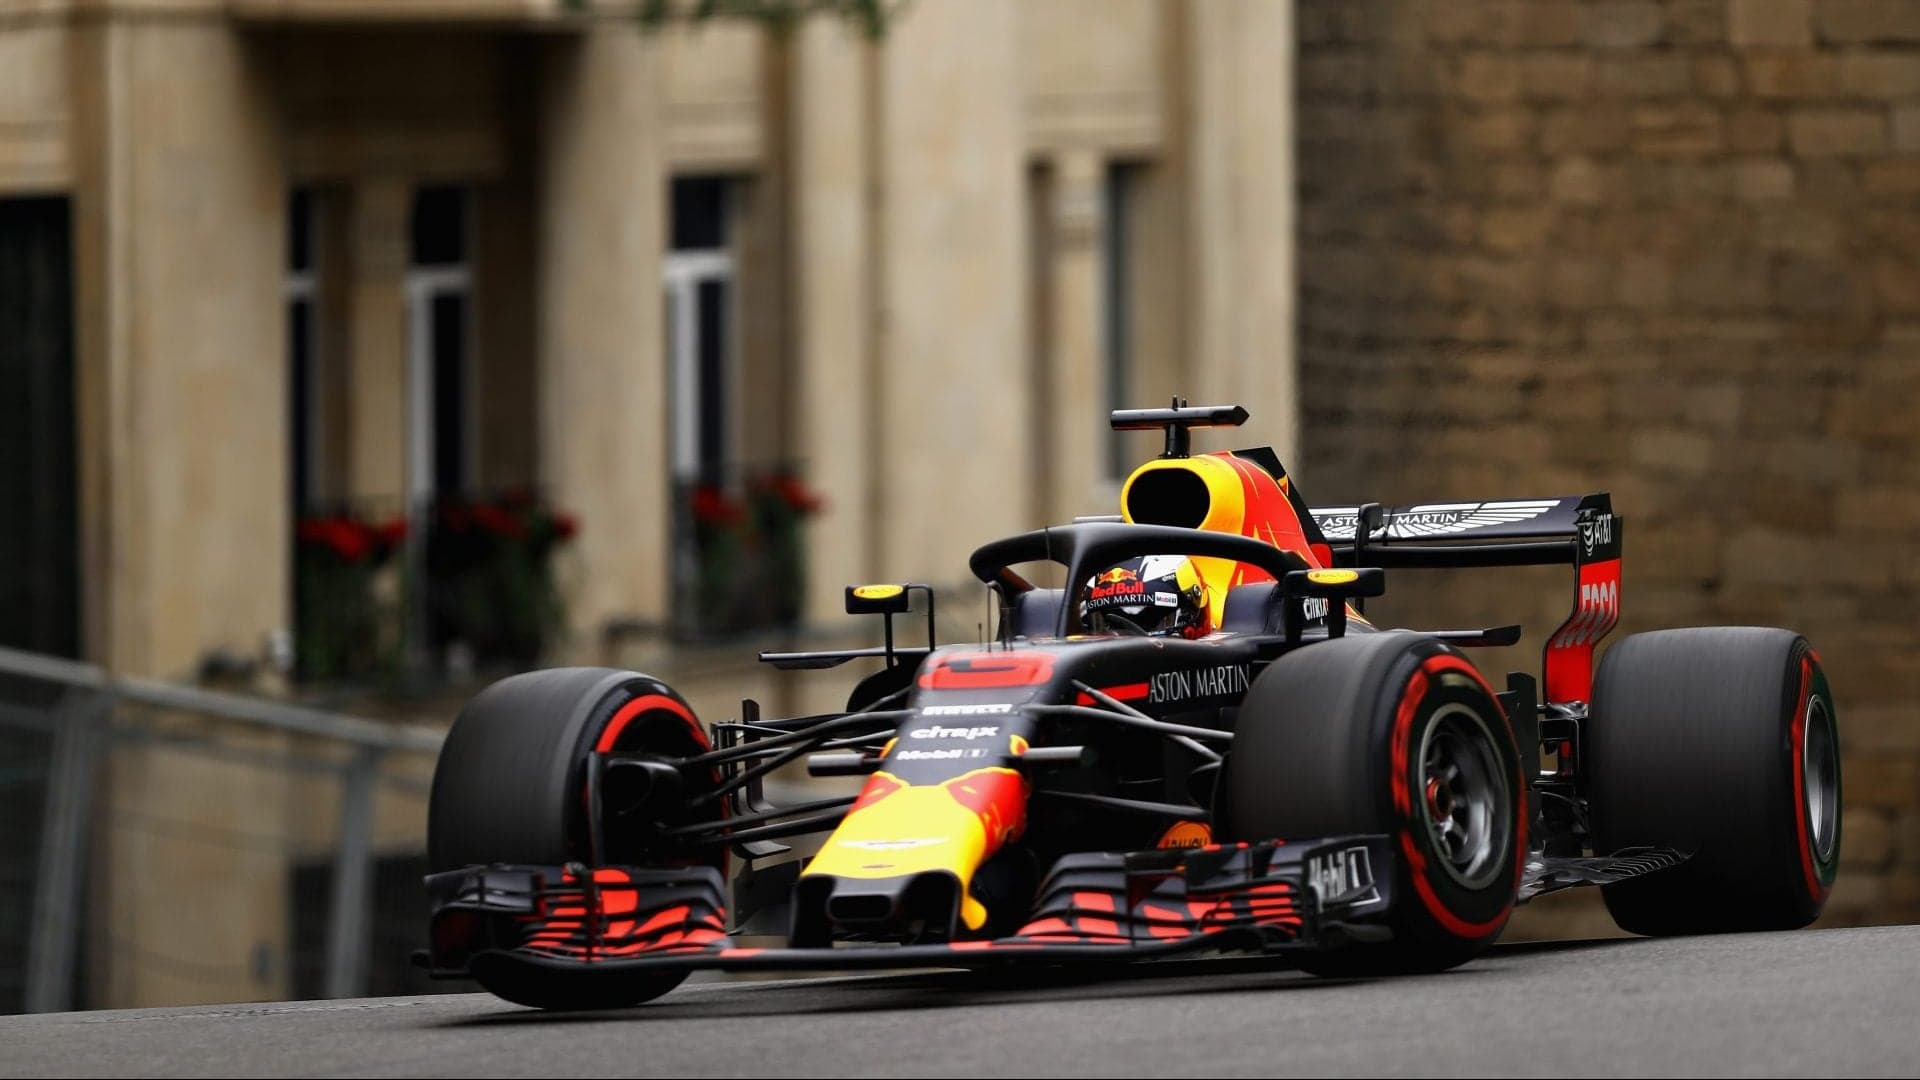 Daniel Ricciardo Ahead In Azerbaijan Grand Prix Practice